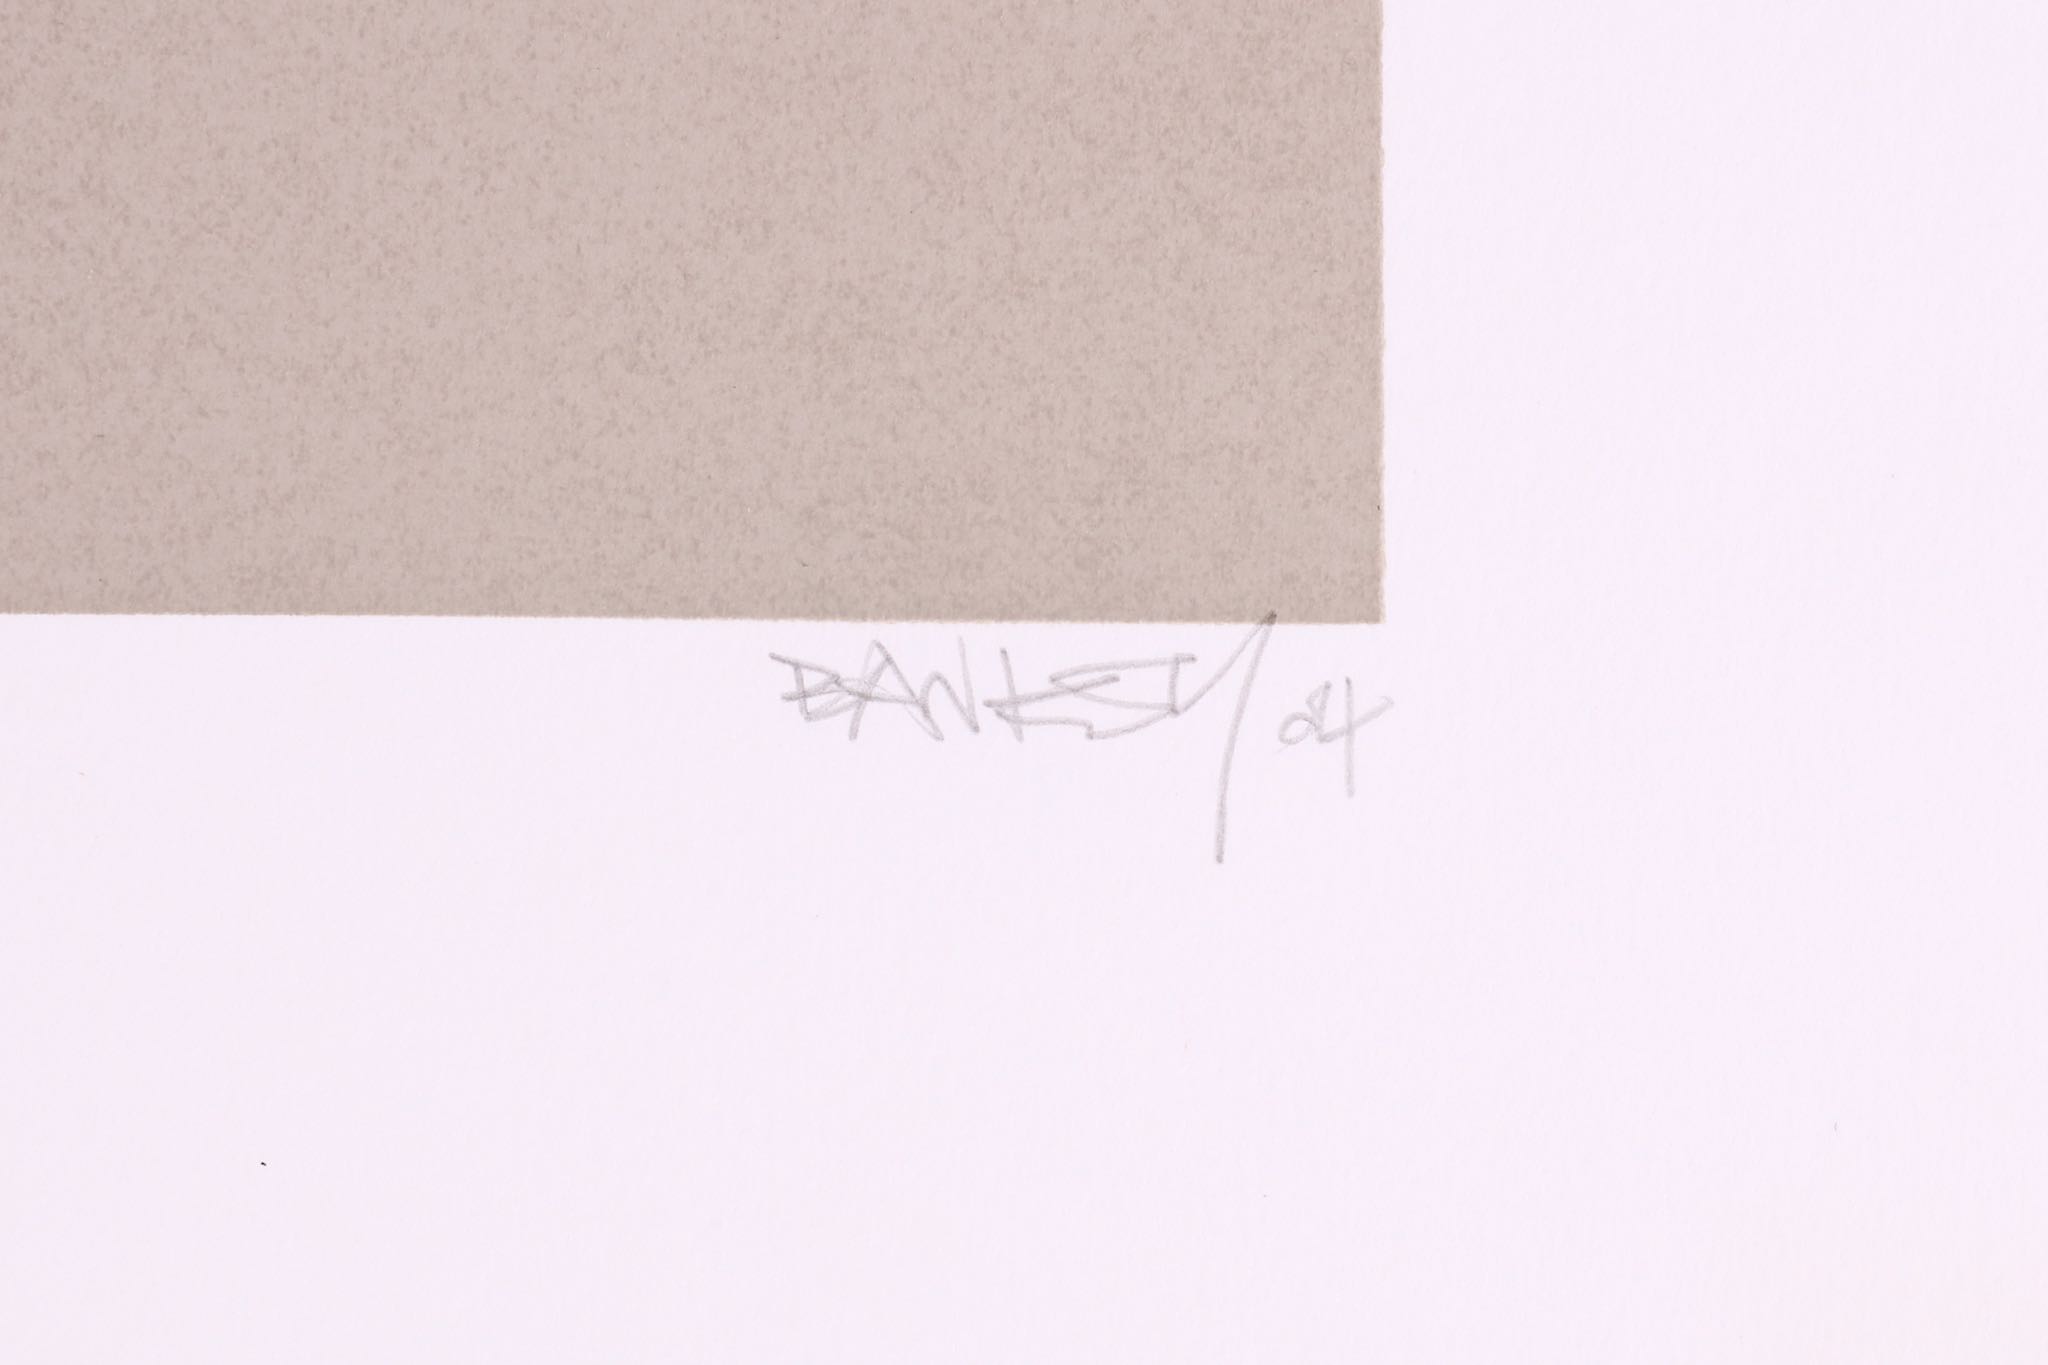 Banksy (British b.1974), 'Napalm', 2004, screenpri - Image 4 of 4